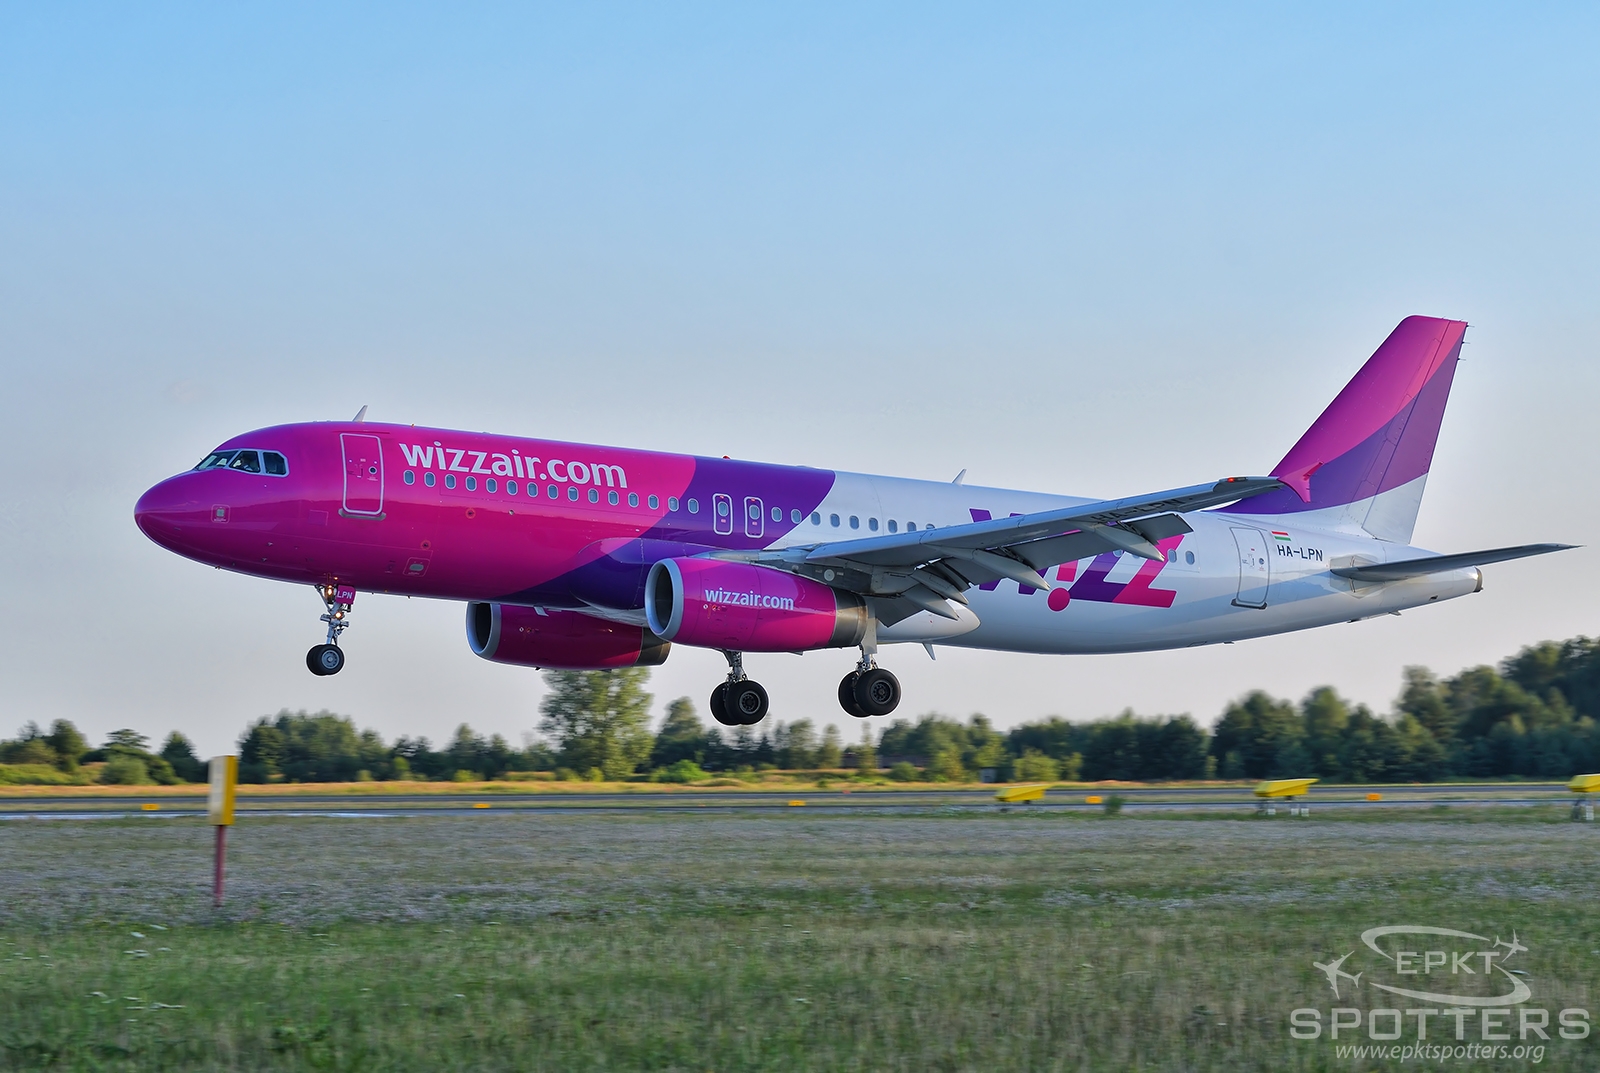 HA-LPN - Airbus A320 -232 (Wizz Air) / Pyrzowice - Katowice Poland [EPKT/KTW]